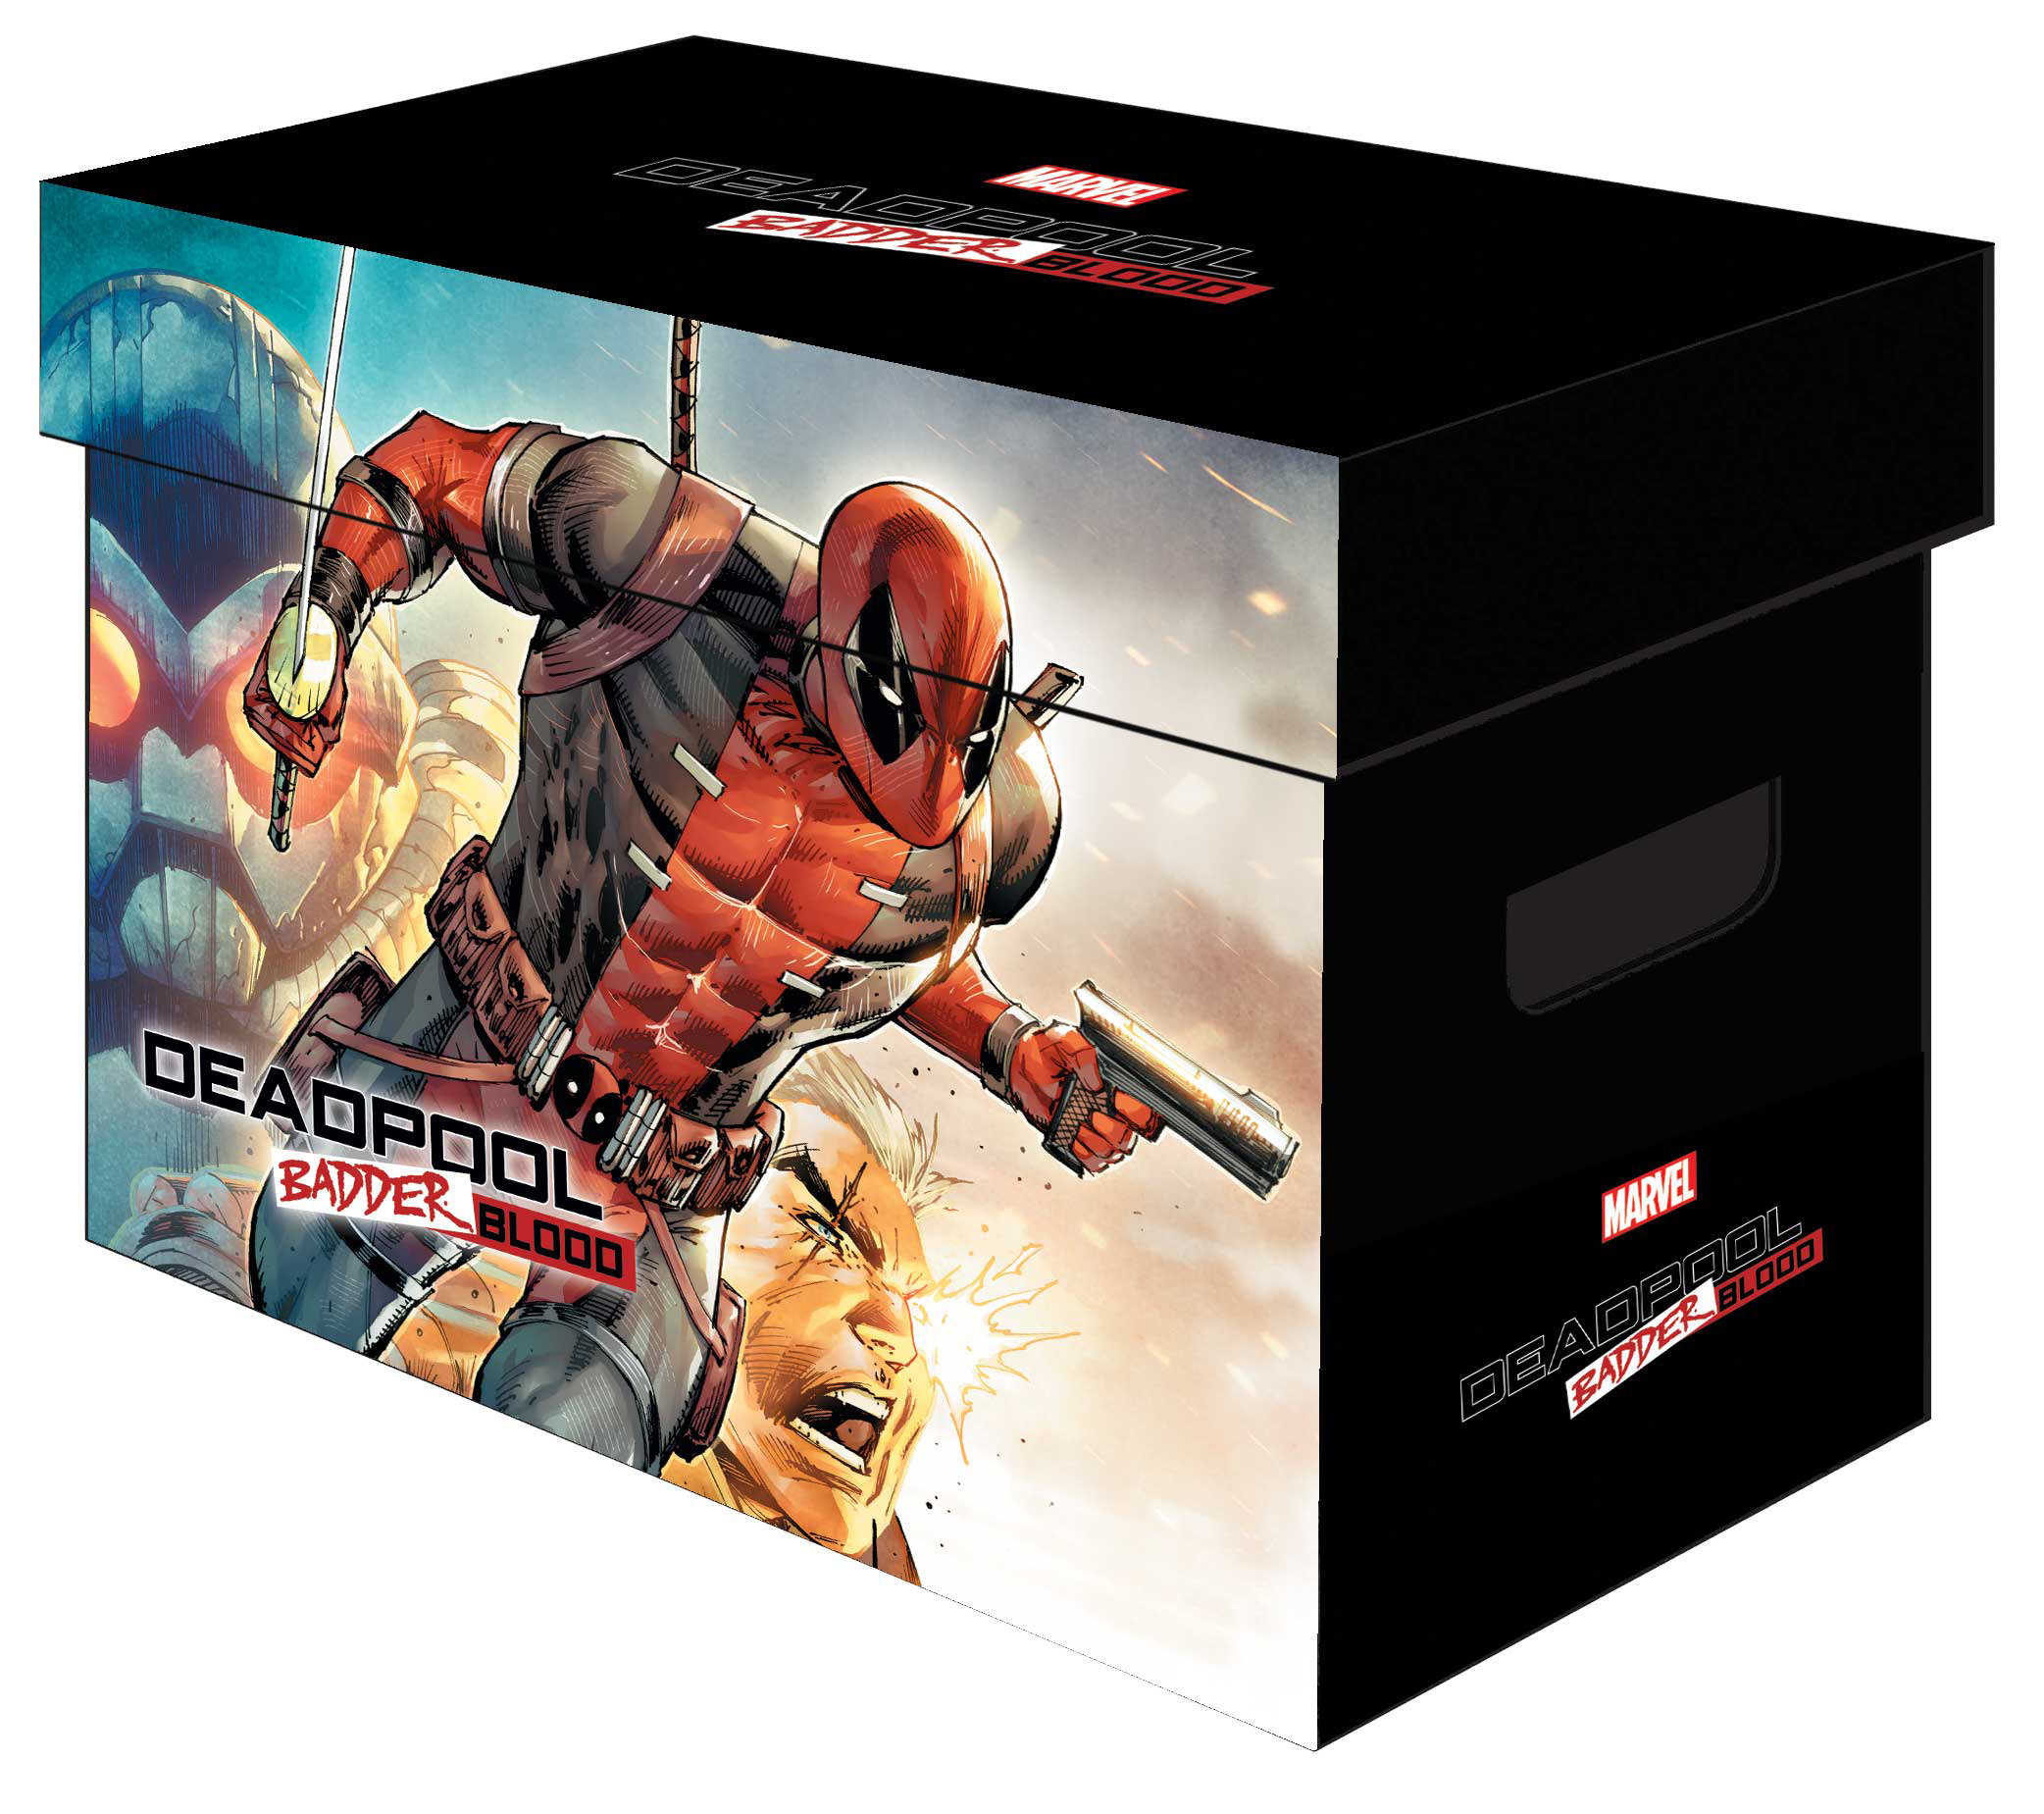 Marvel Graphic Comic Box Deadpool Badder Blood (Bundles of 5)